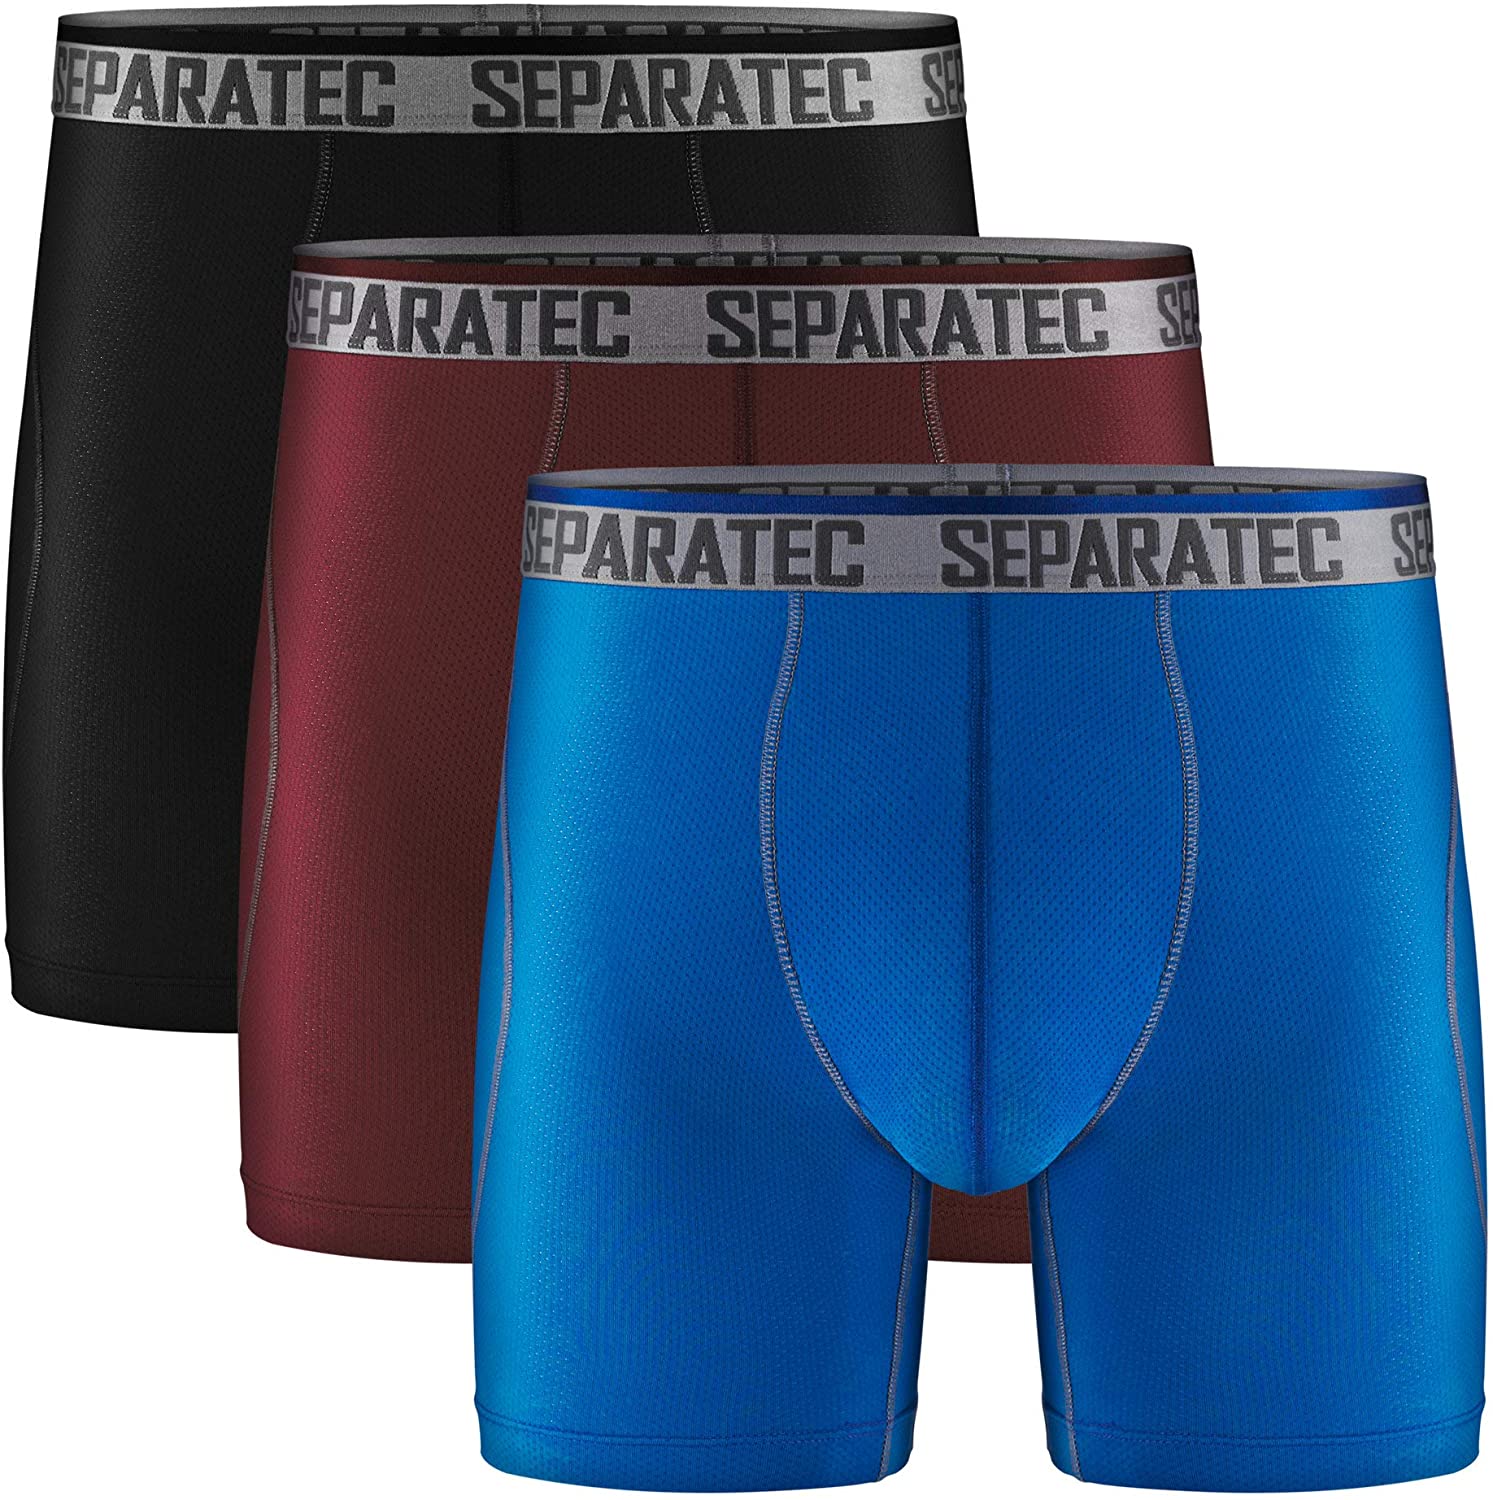 Separatec Mens Underwear 3 Pack Dual Pouch Sport Quick Dry Performance Boxer Briefs 